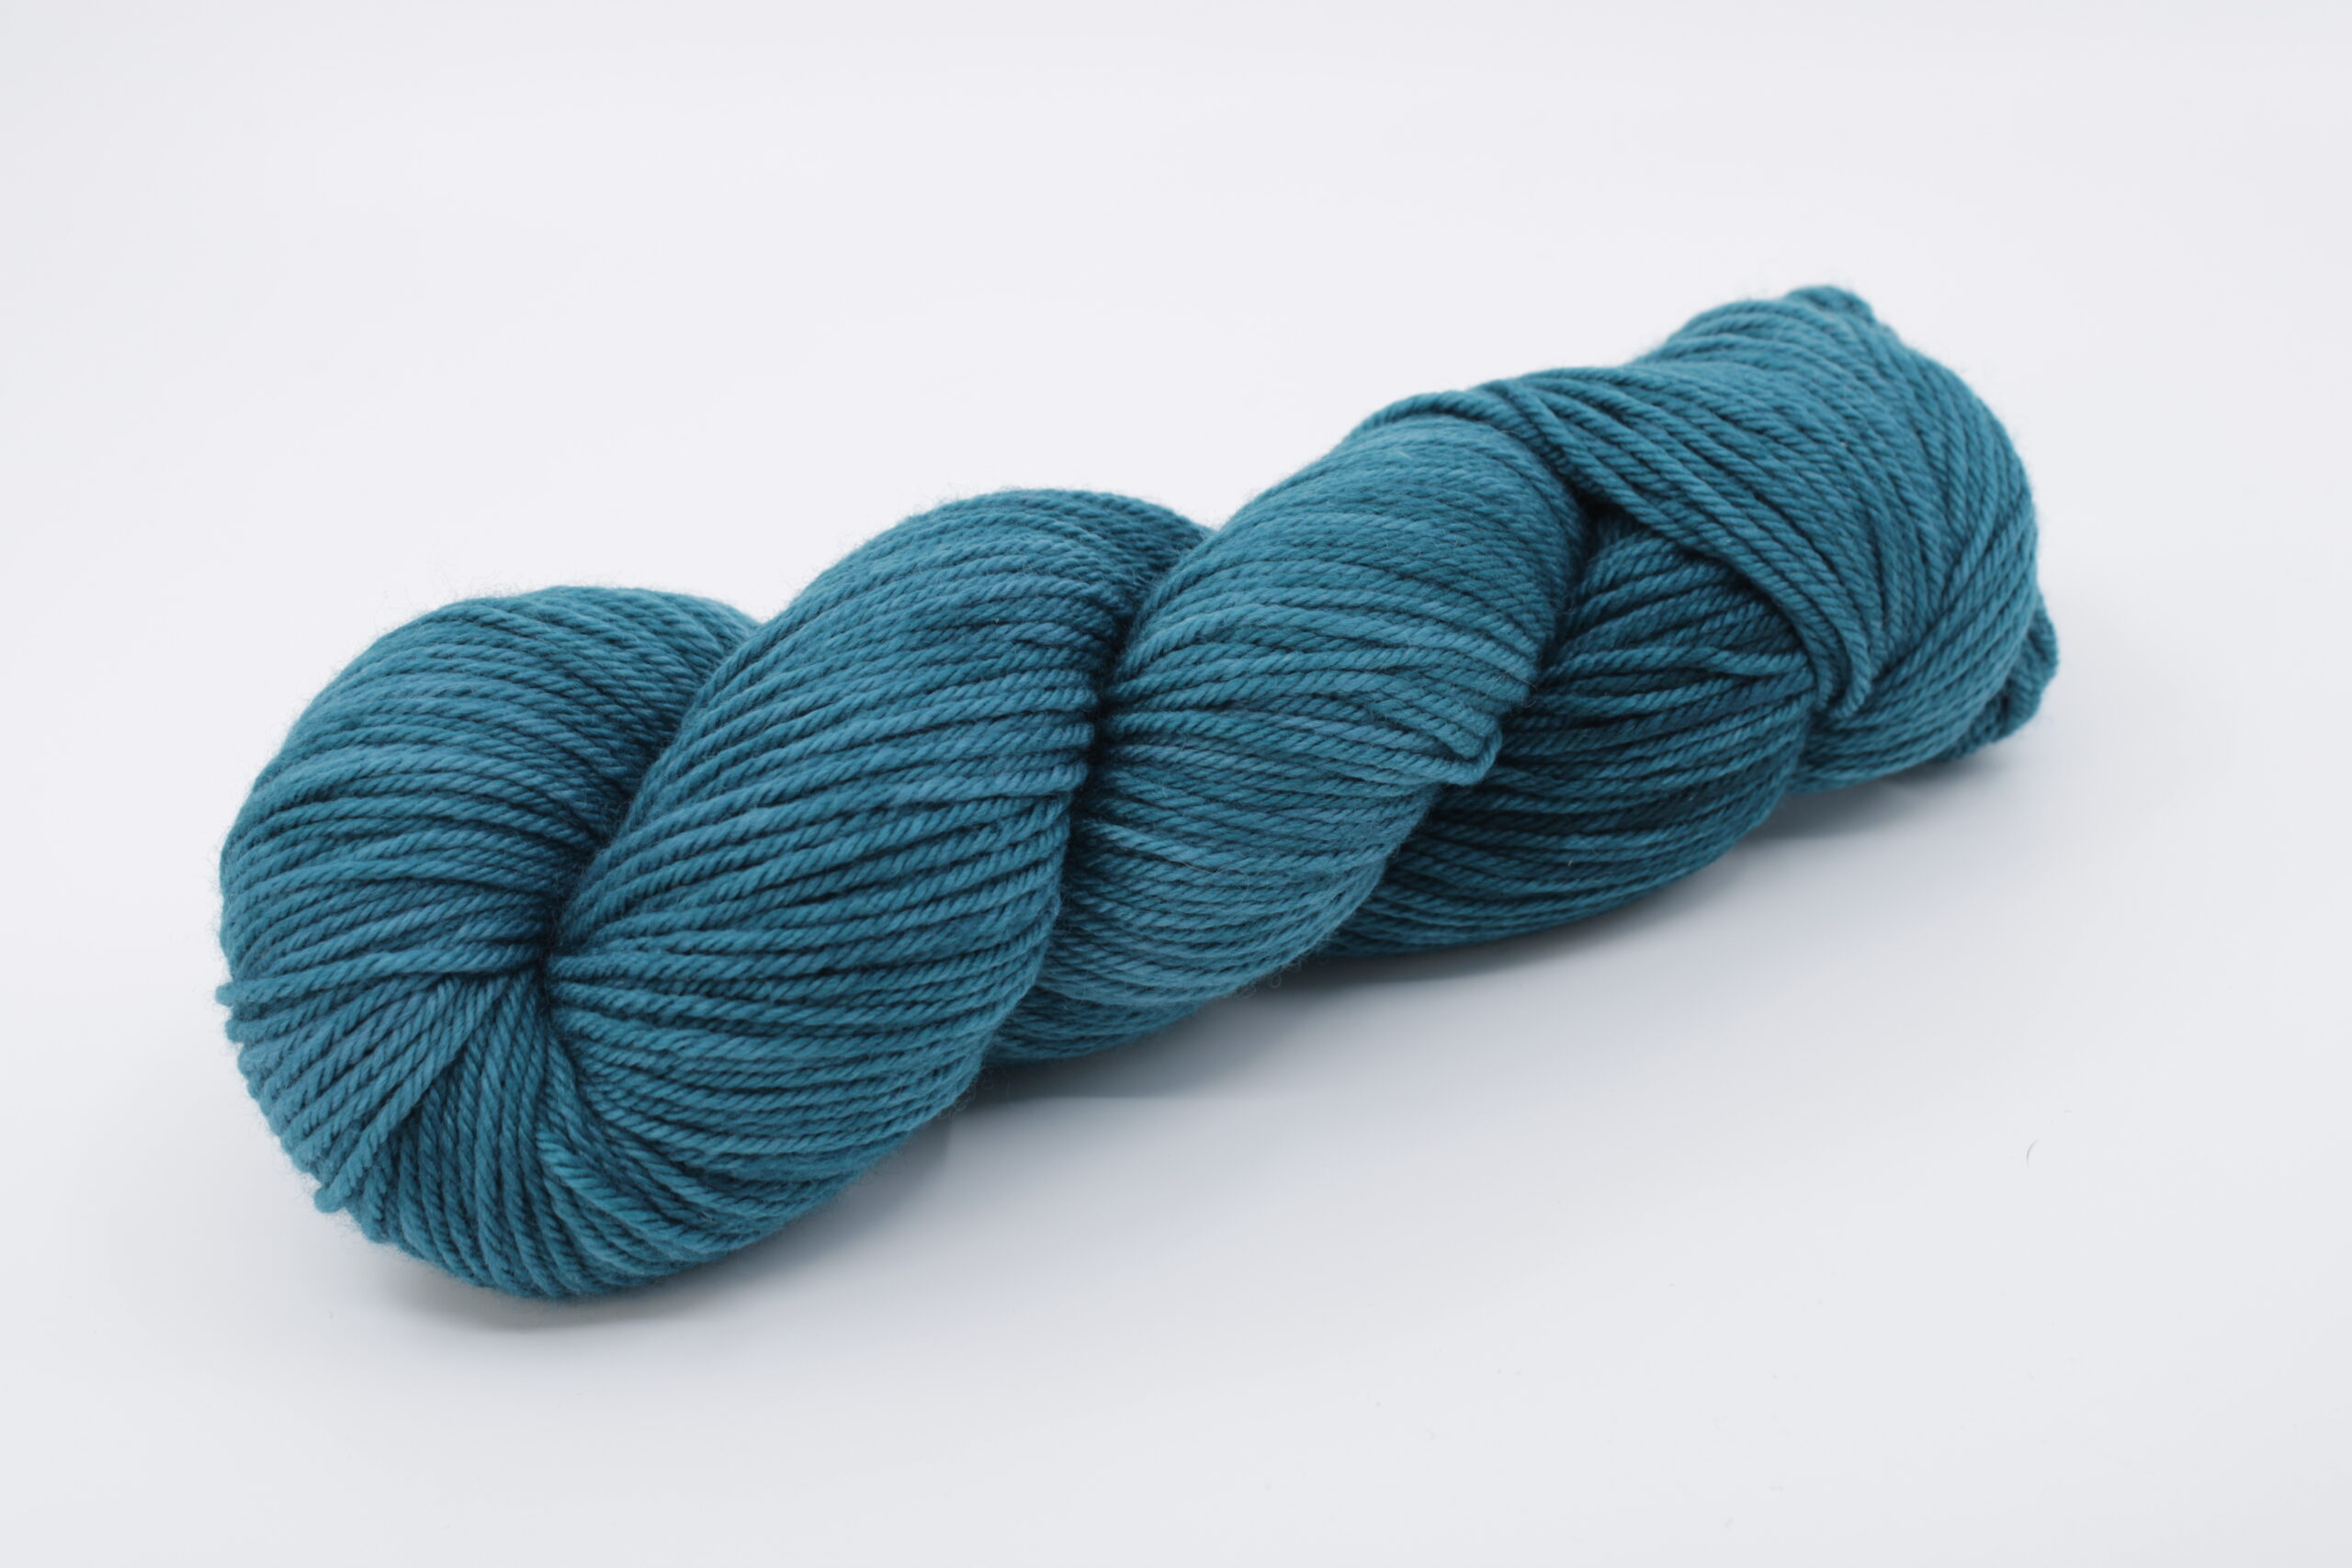 Fibrani wool, base: Flocon DK. 100% untreated merino wool, green color. Color: Logan.